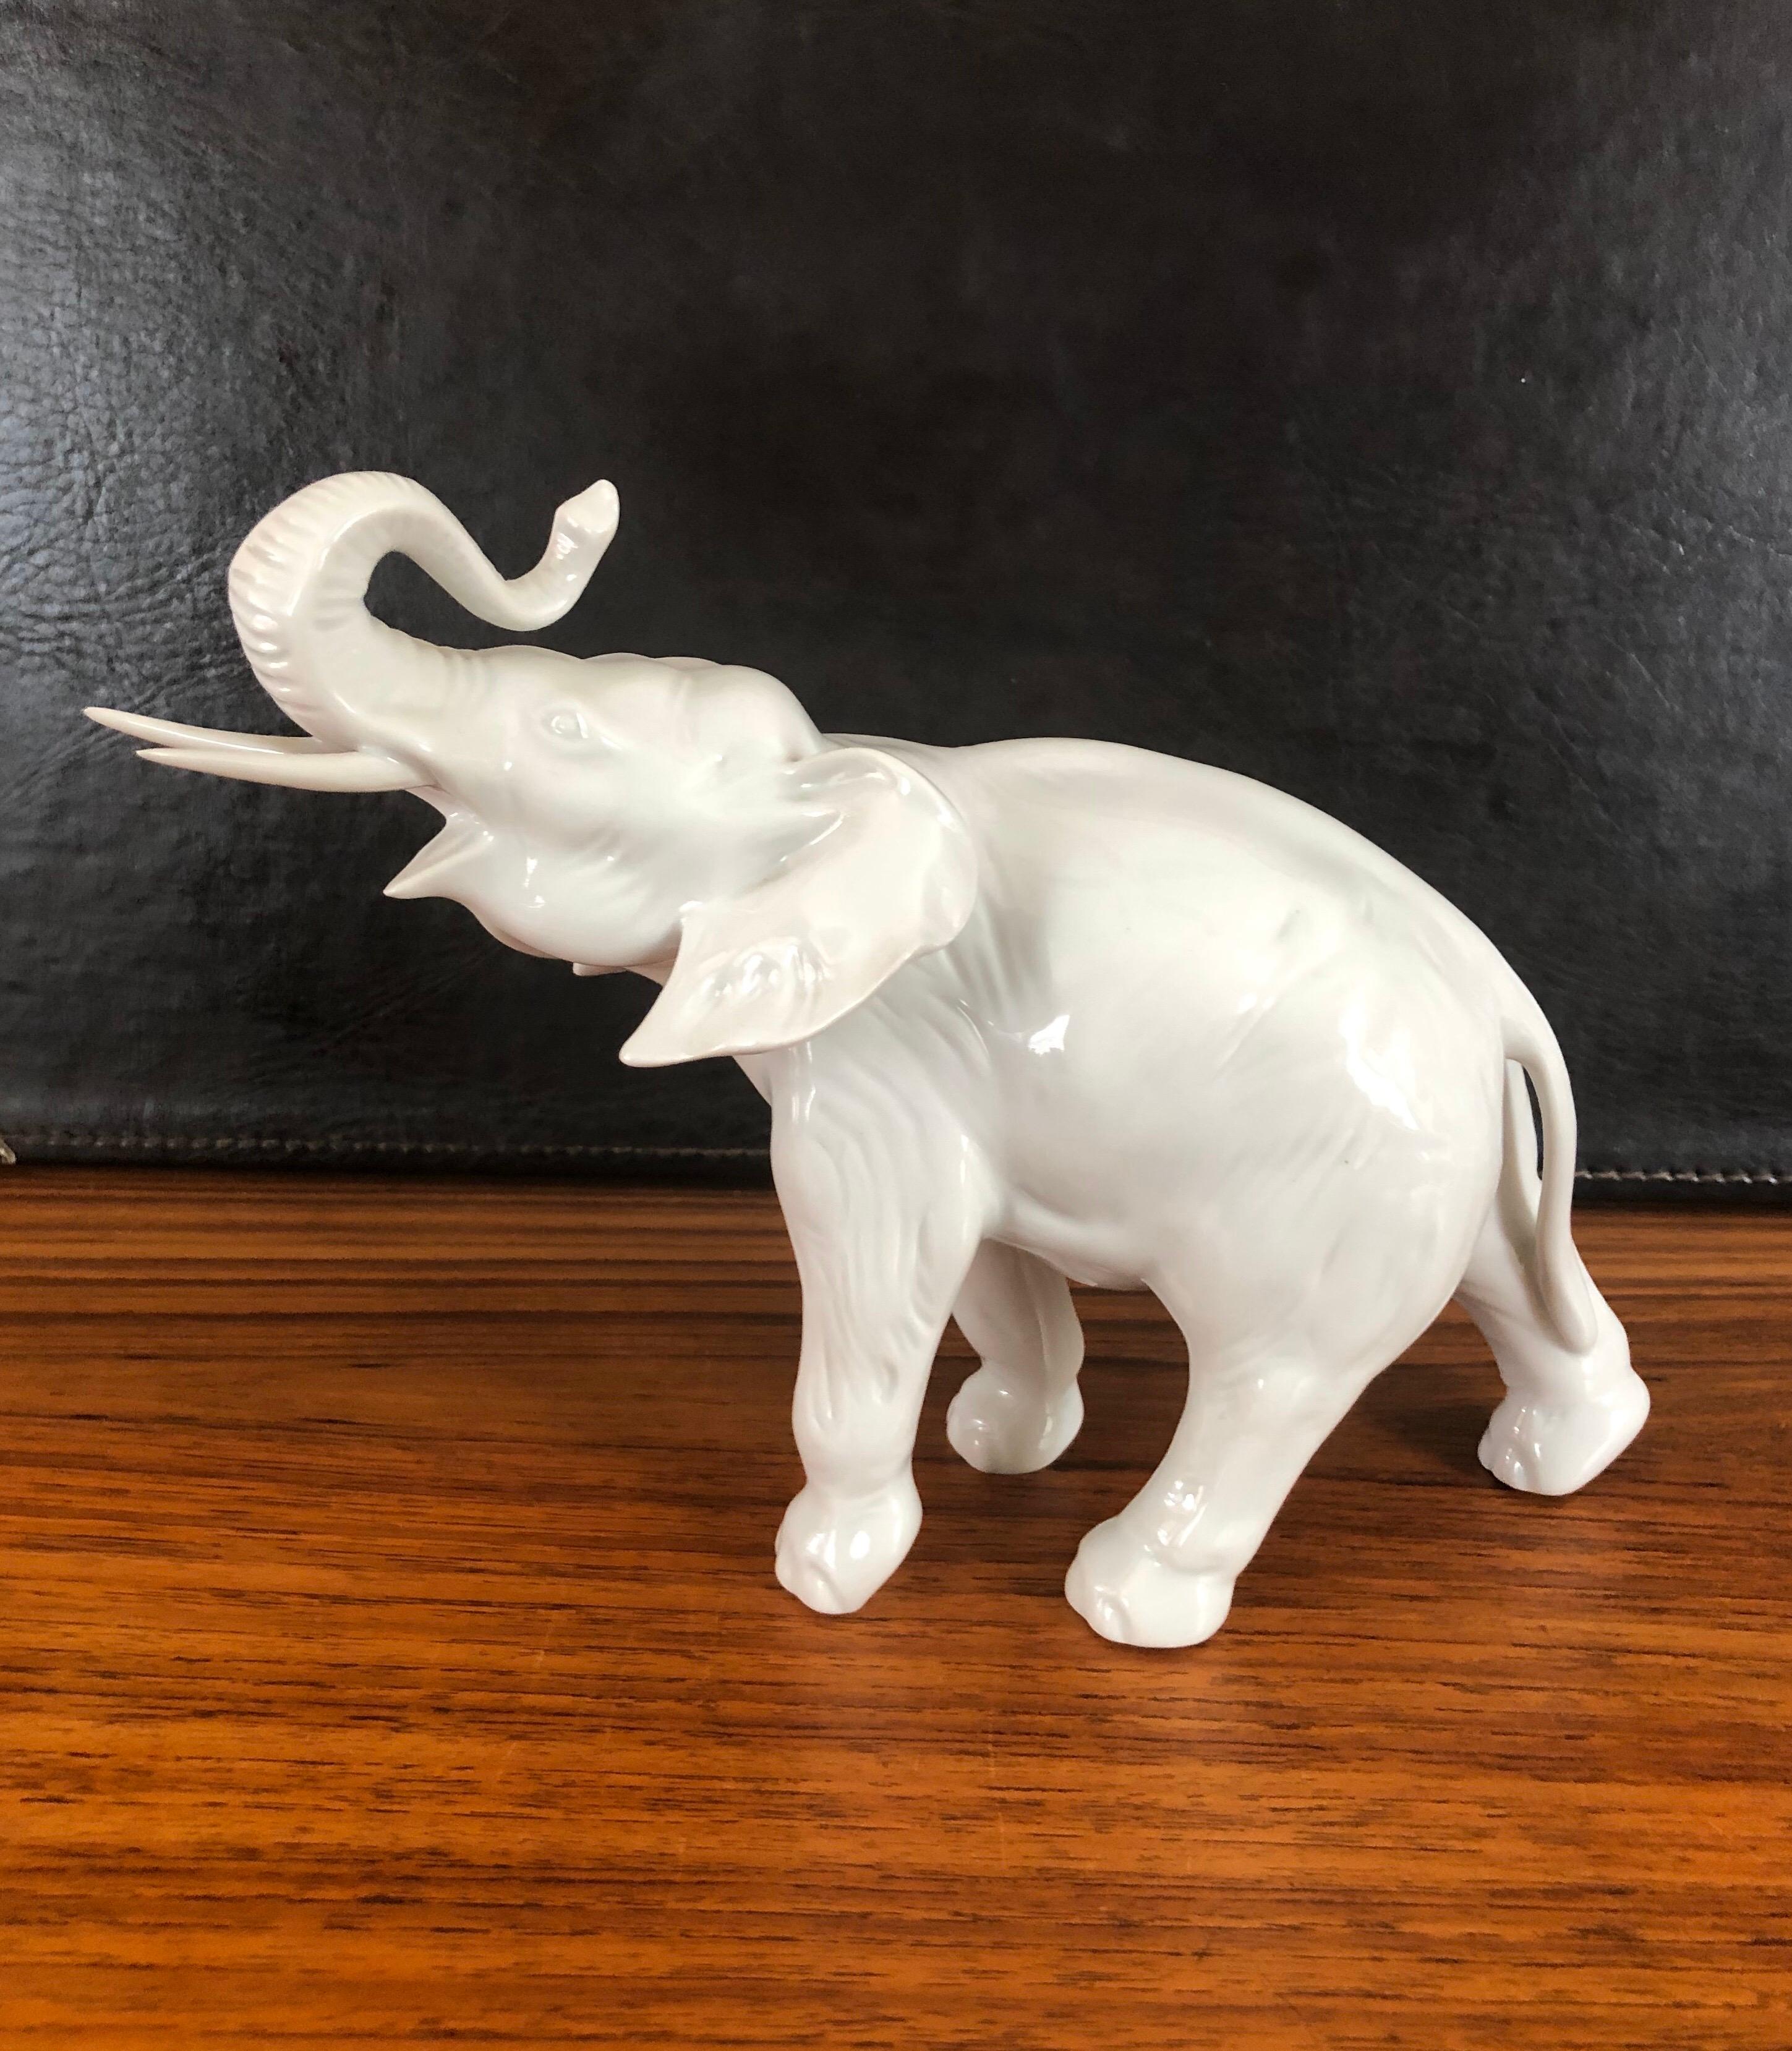 Pair of White Porcelain Elephant Sculptures by Royal Dux For Sale 1